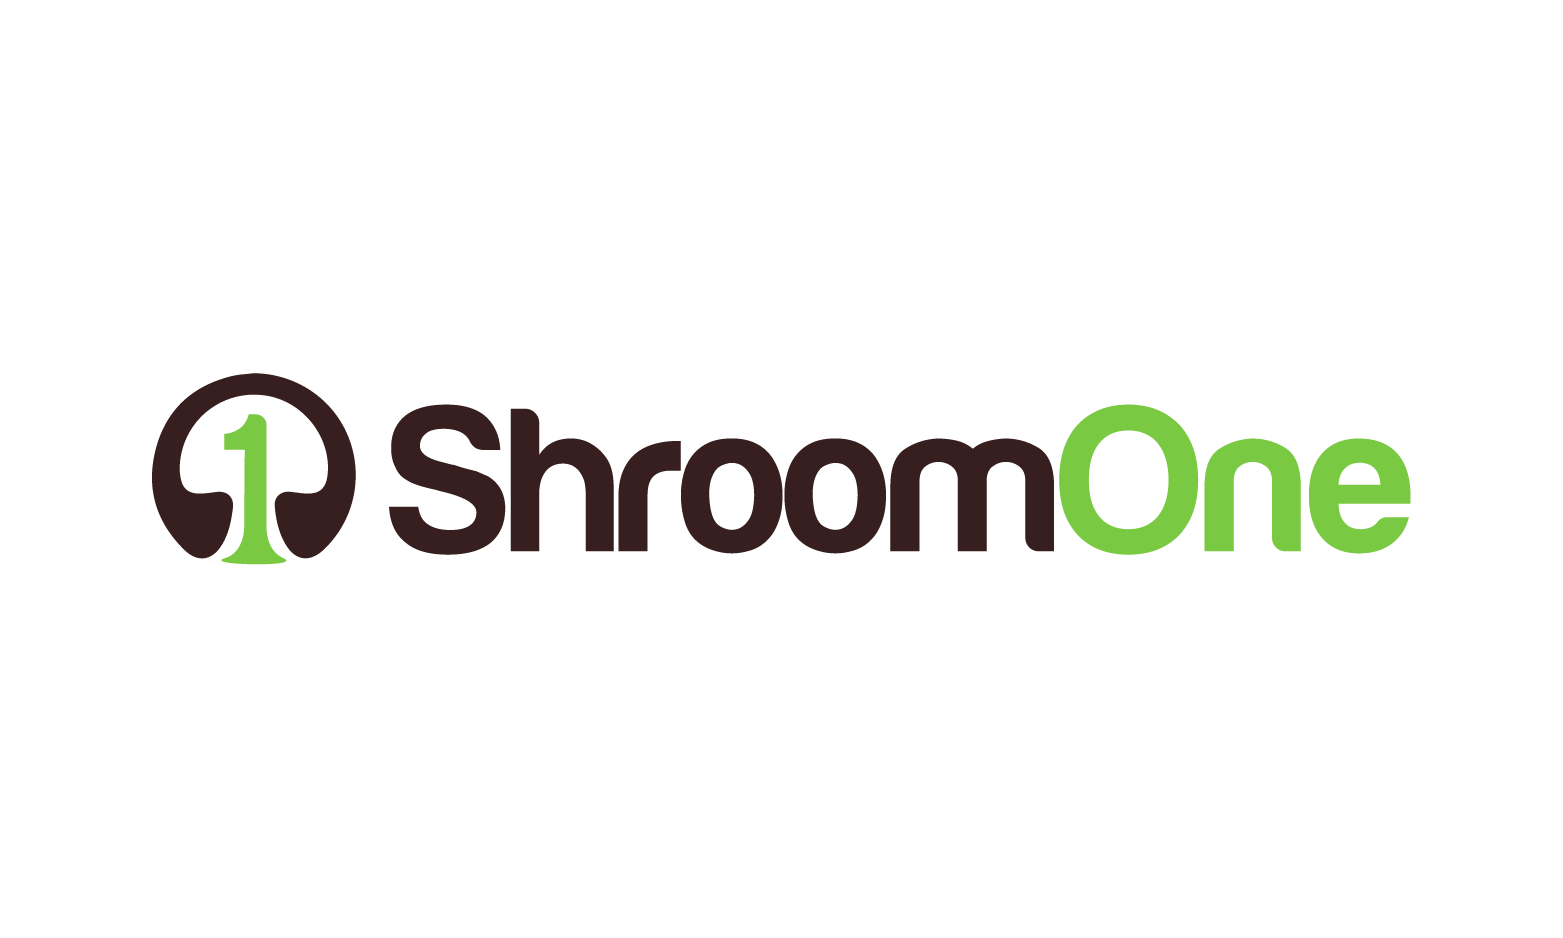 ShroomOne.com - Creative brandable domain for sale